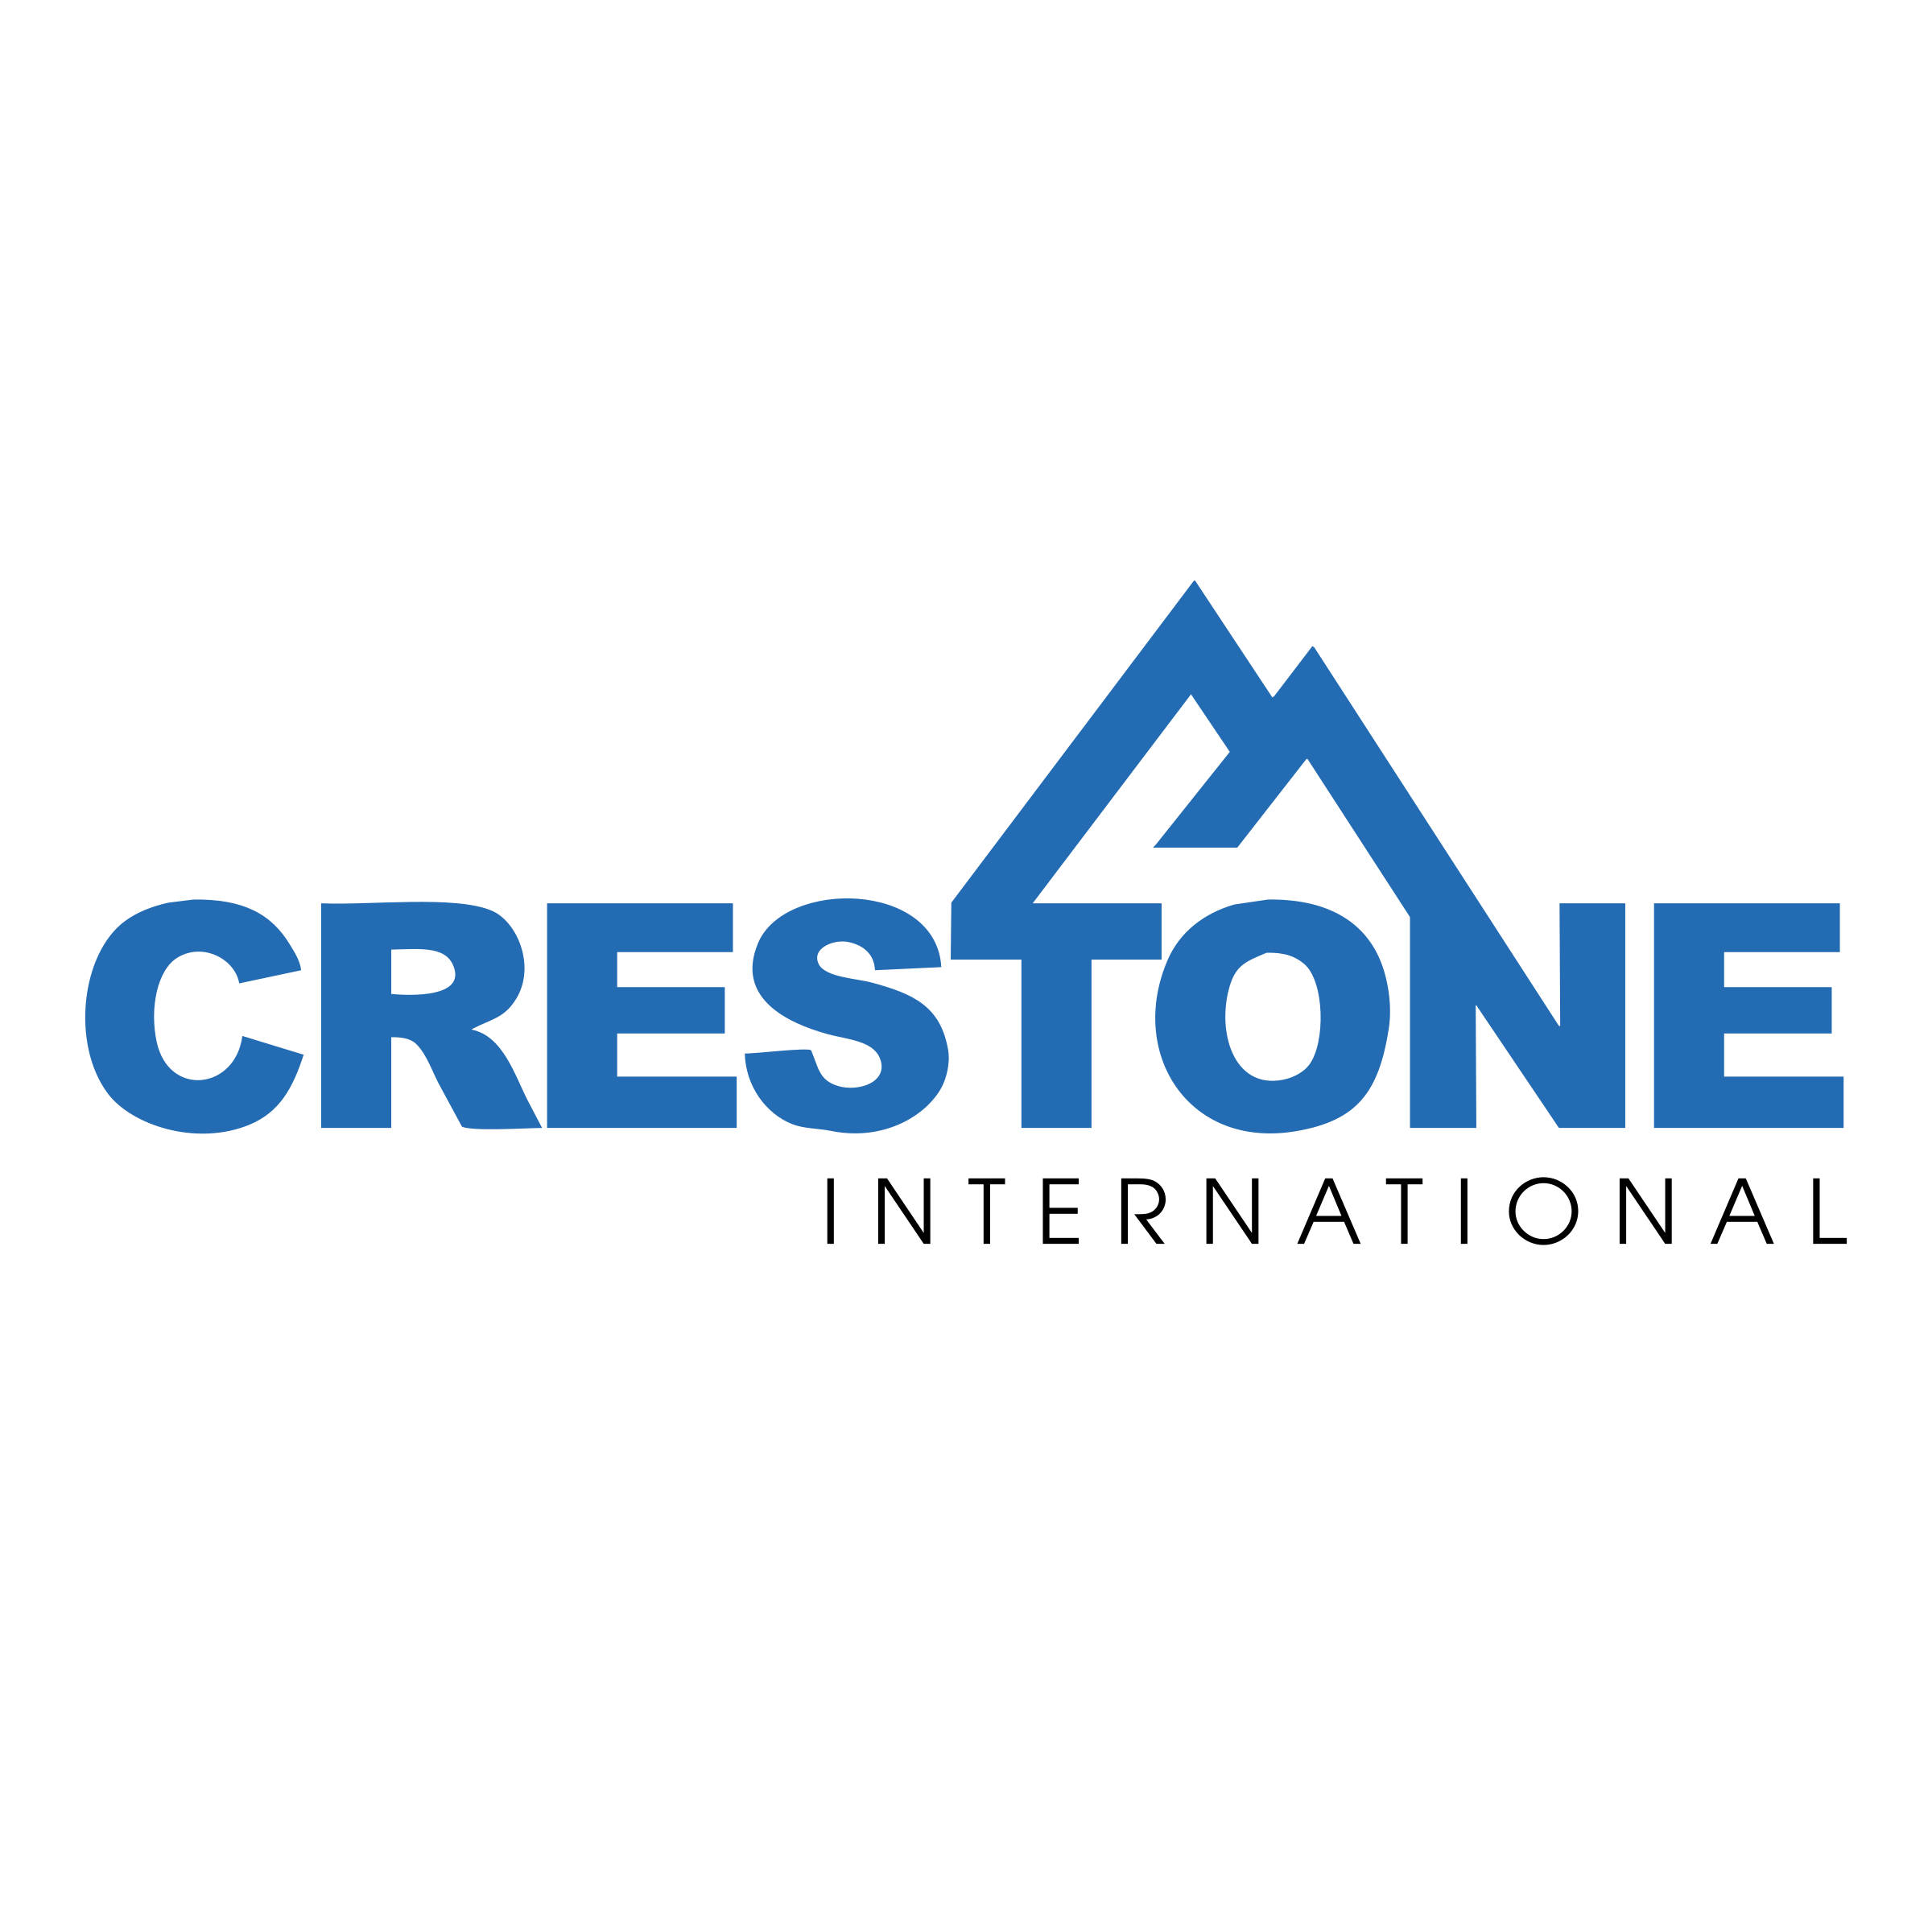 CyberCash Logo - Crestone International Logo PNG Transparent & SVG Vector - Freebie ...